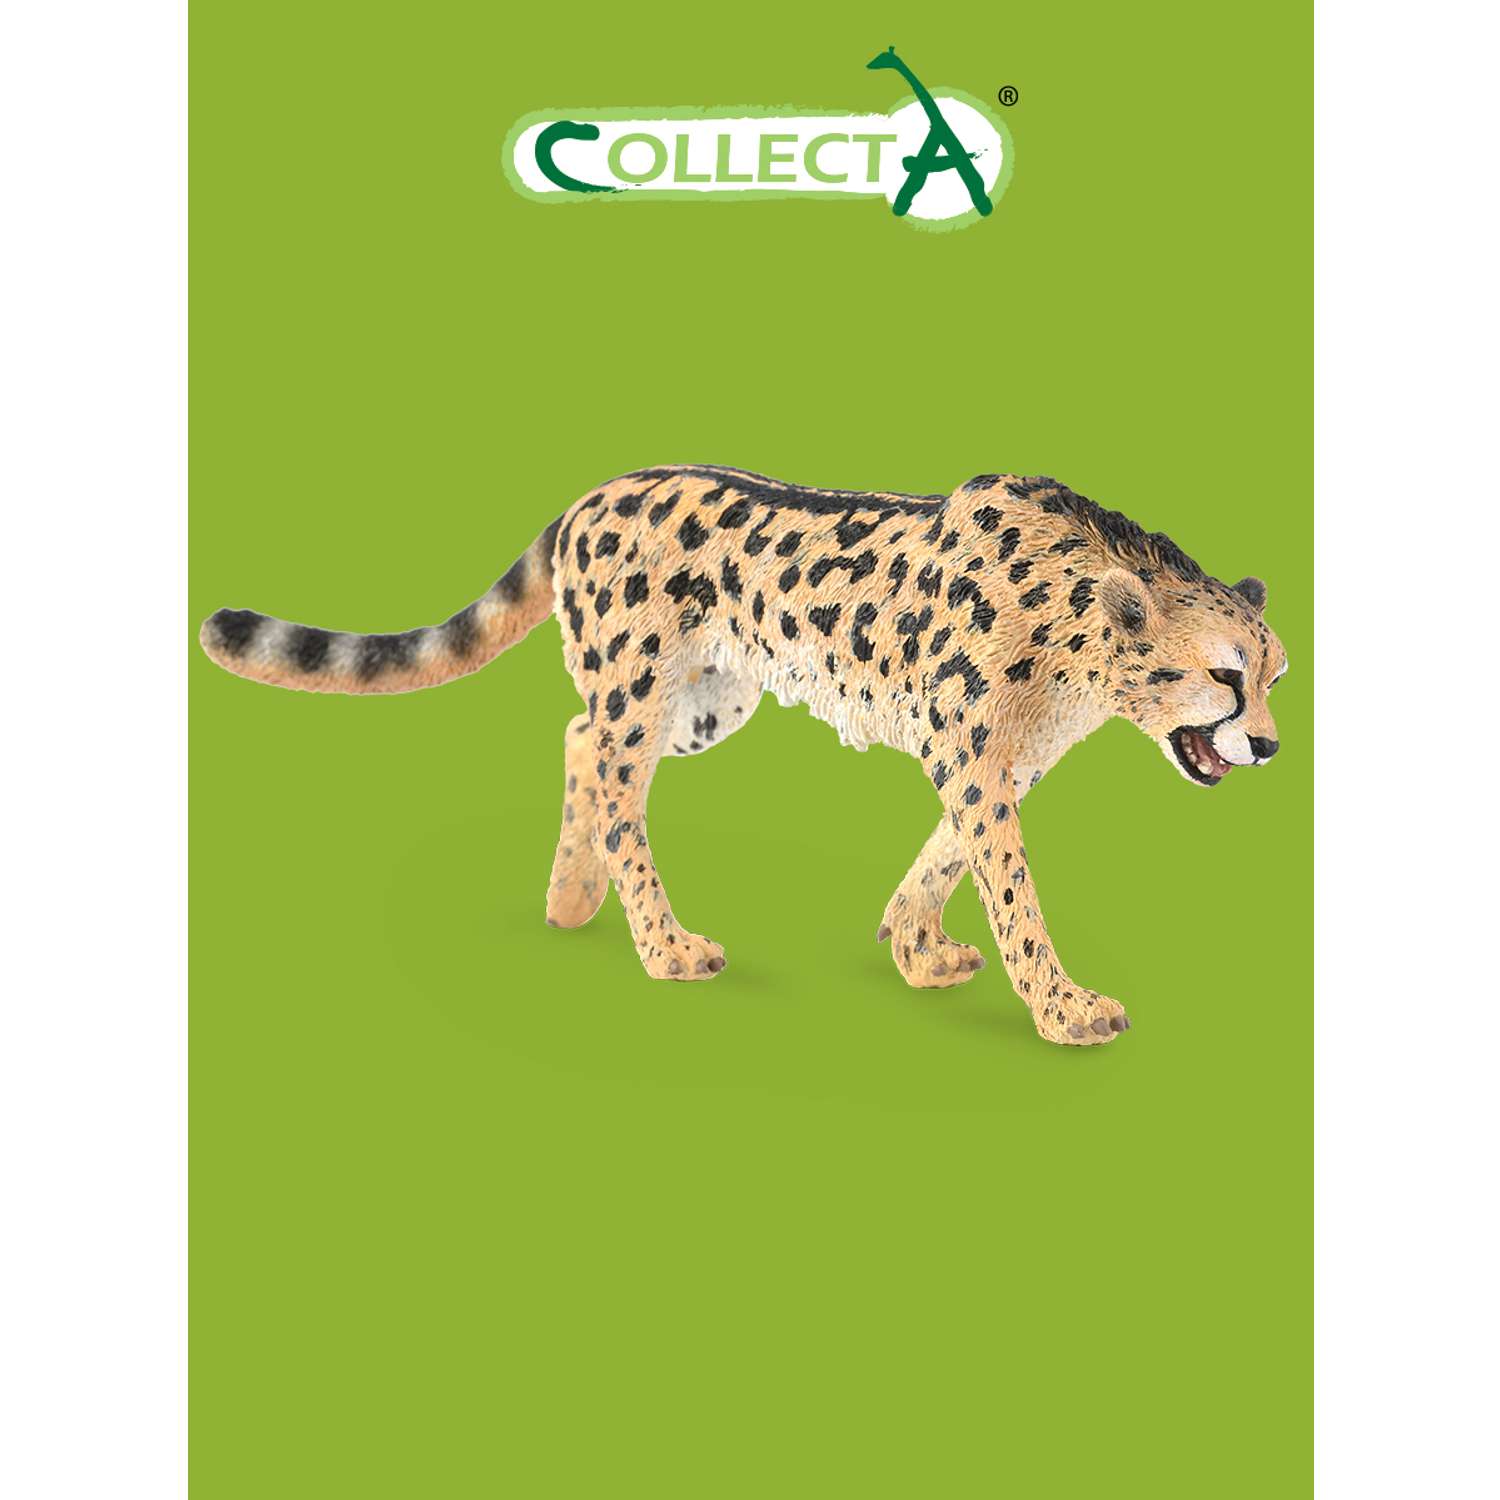 Игрушка Collecta Королевский гепард фигурка животного - фото 1